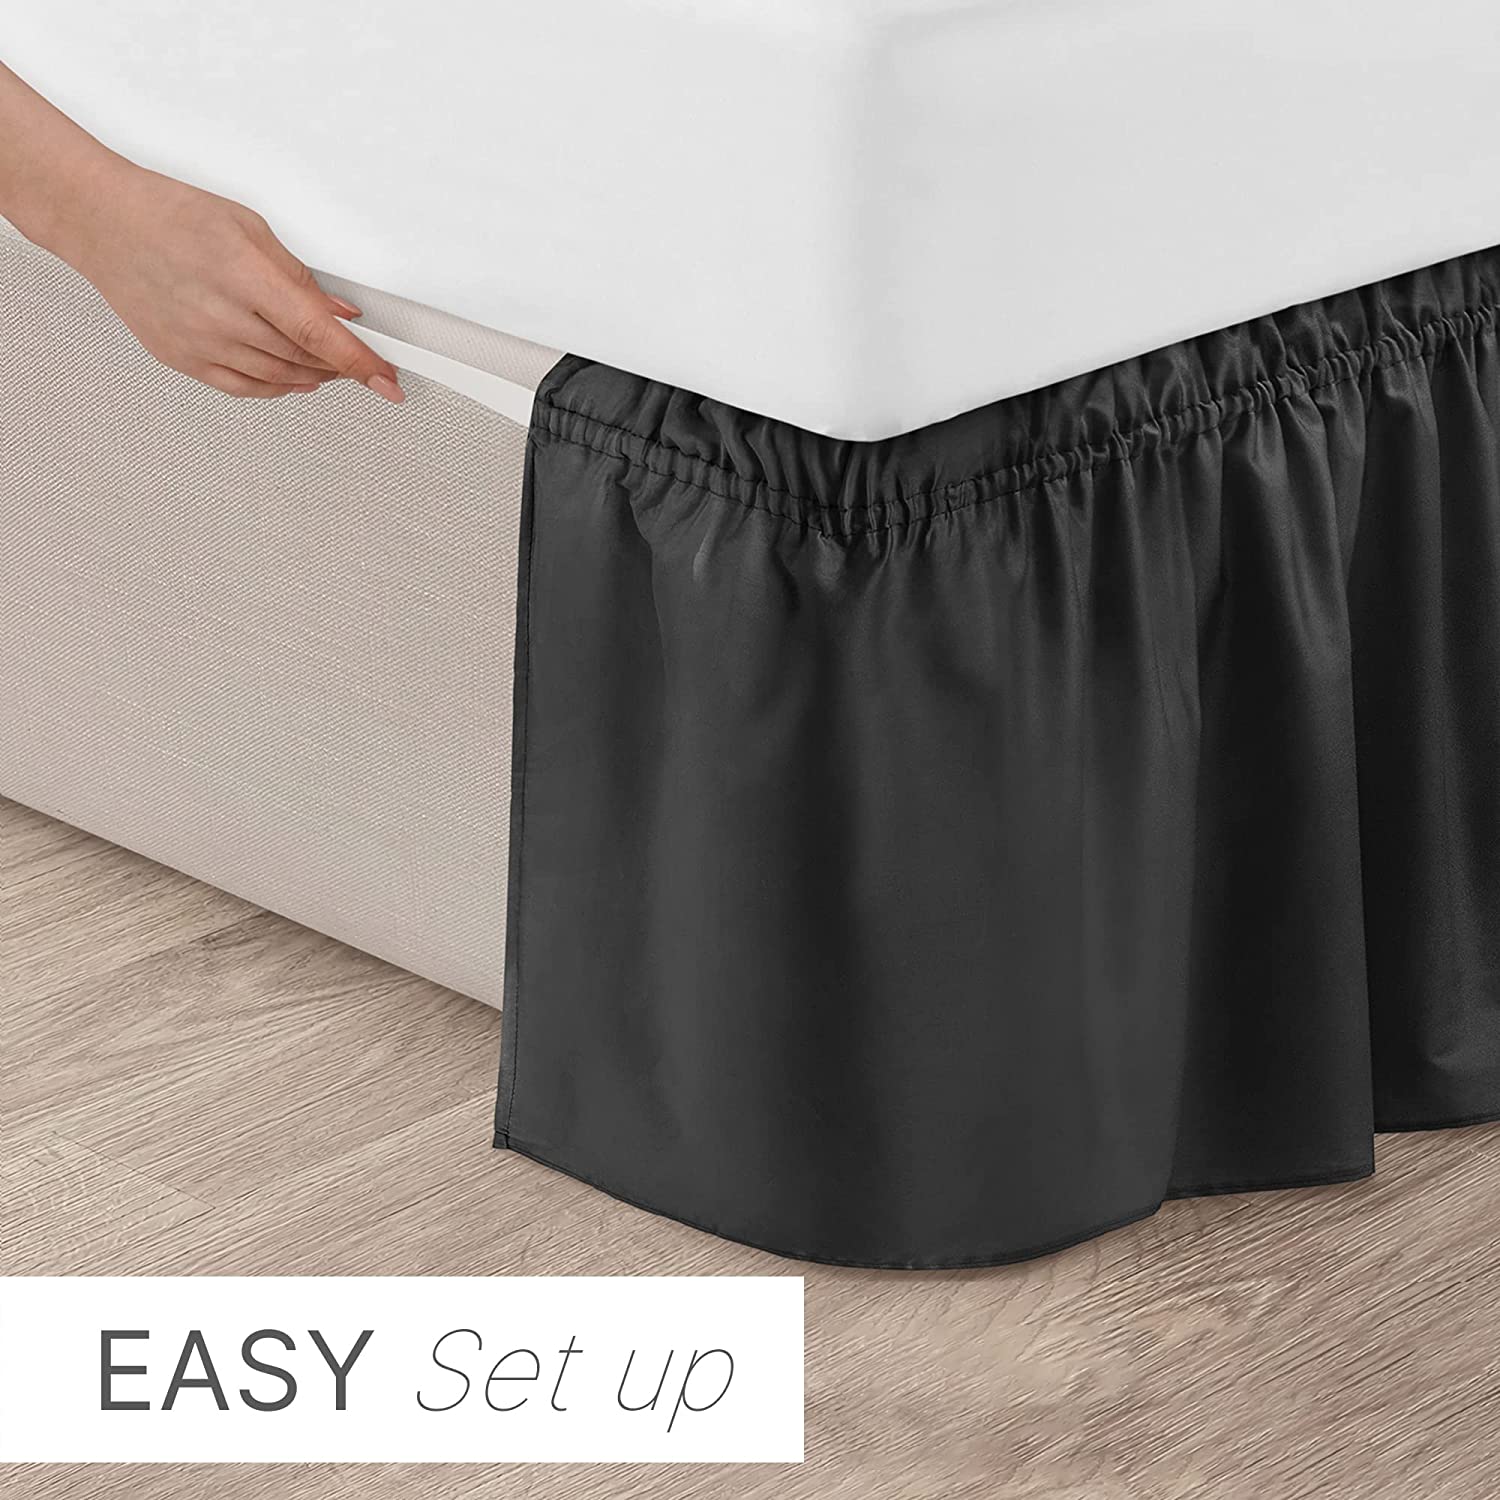 Ruffled Elastic Wrap Around Bedskirt 12 Inch Drop - Black